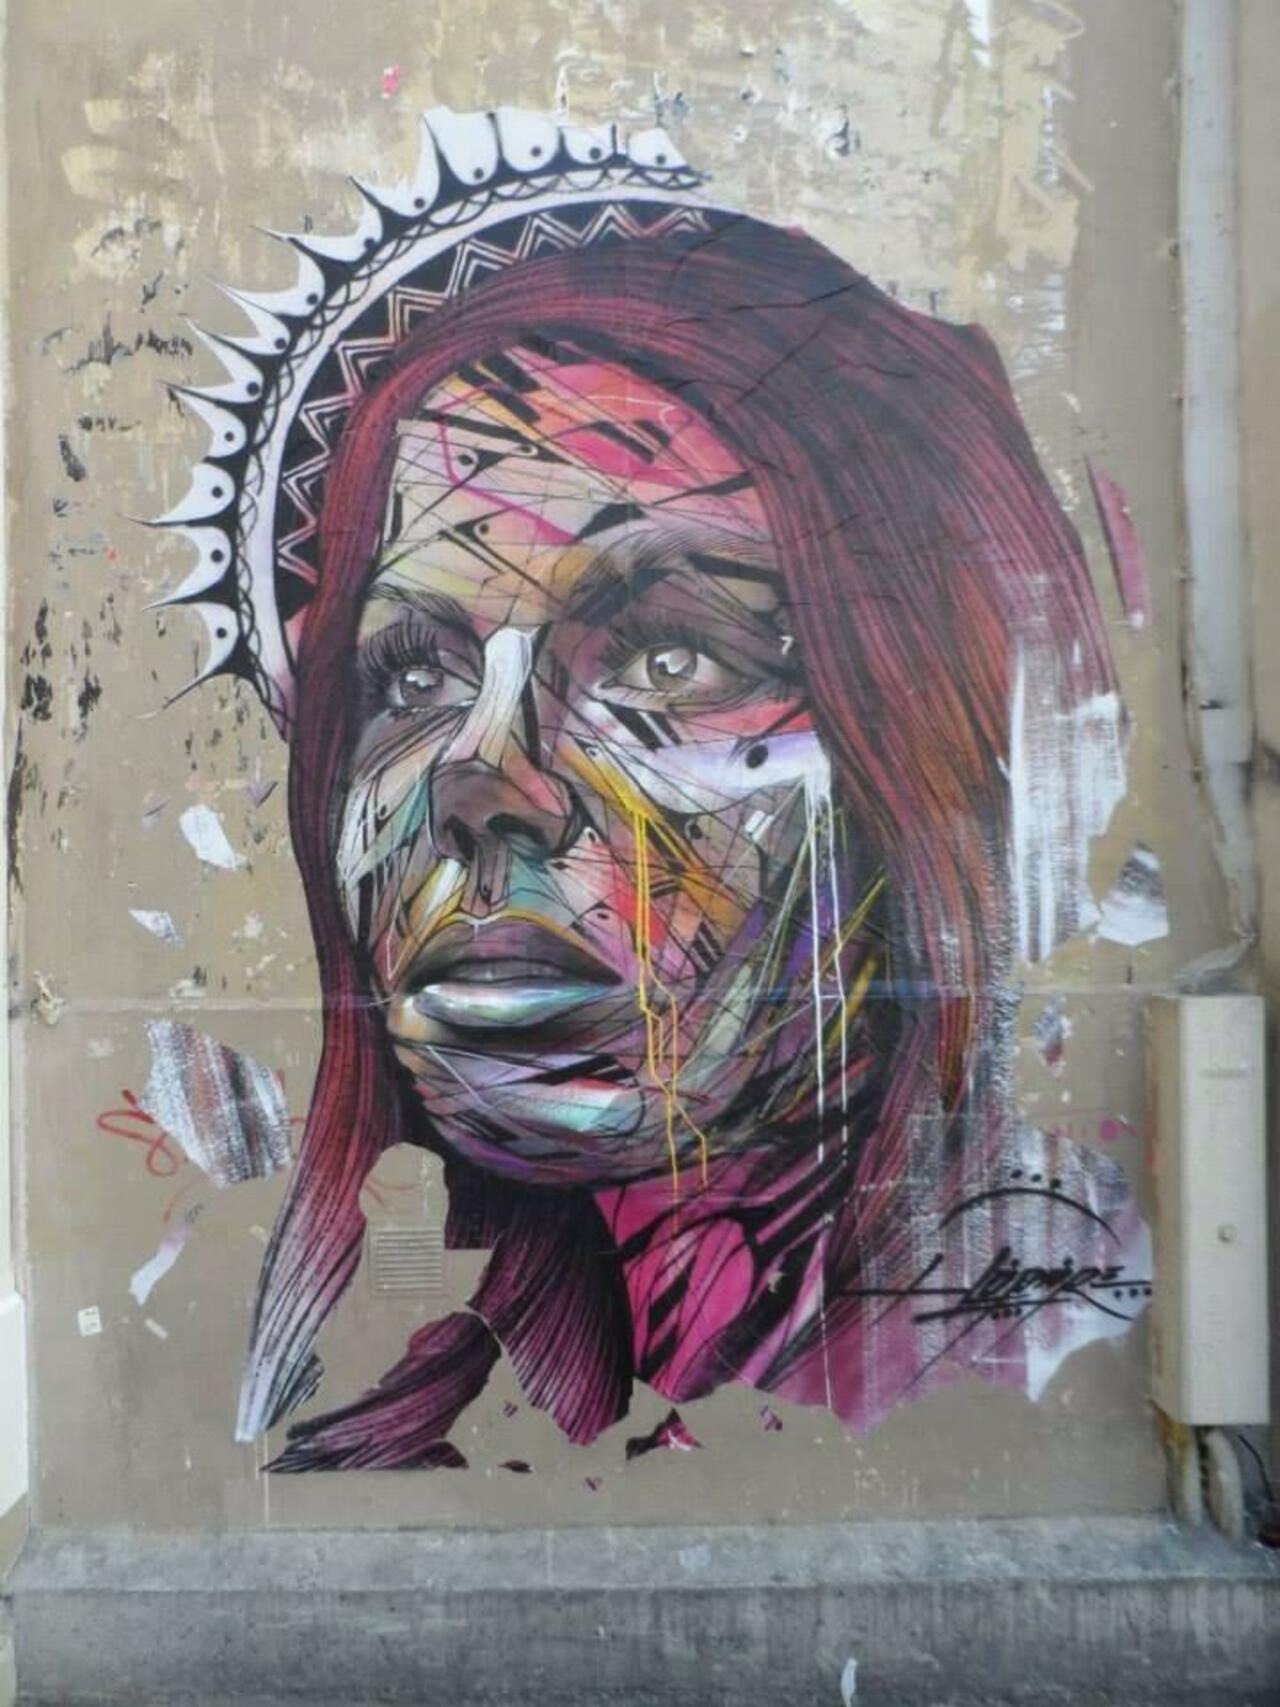 RT @designopinion: Artist Hopare new signature Street Art portrait located in Paris, France #art #mural #graffiti #streetart https://t.co/gofyMB52lP